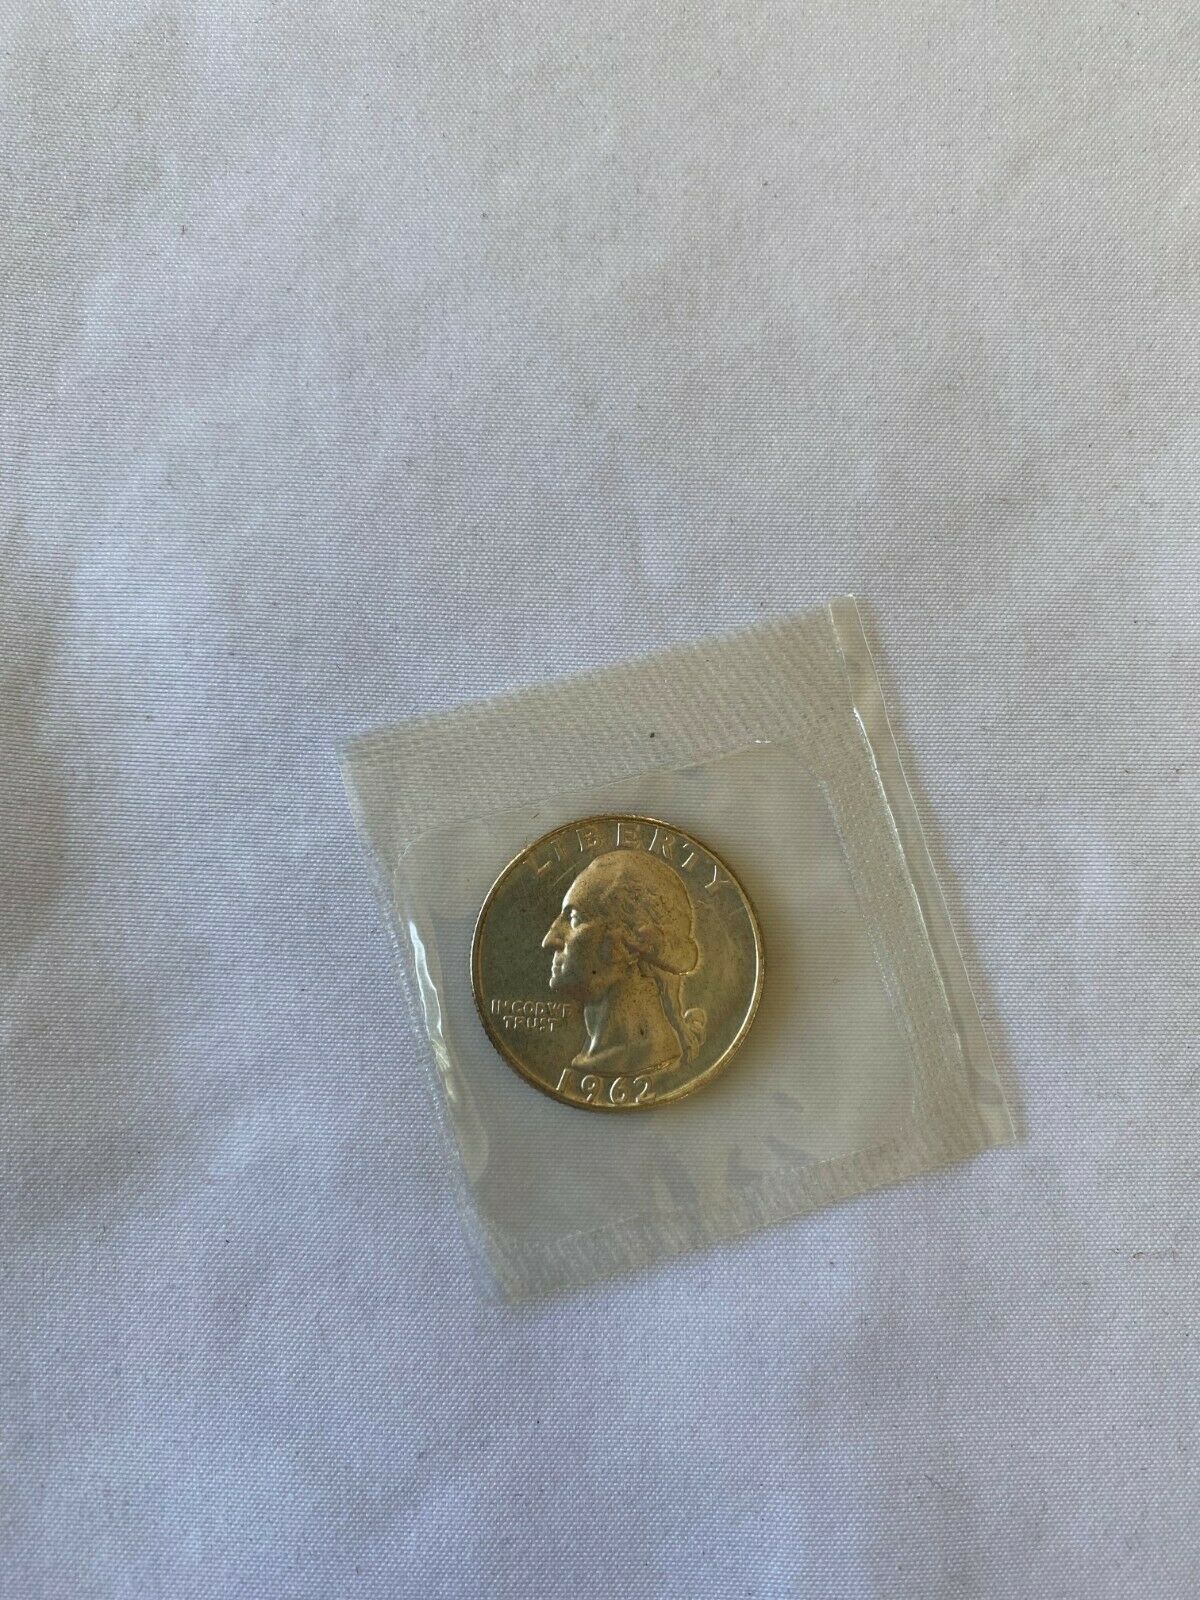 1962 Washington Quarter 25c Silver Proof UNC Coin Sealed in Original Mint Cello